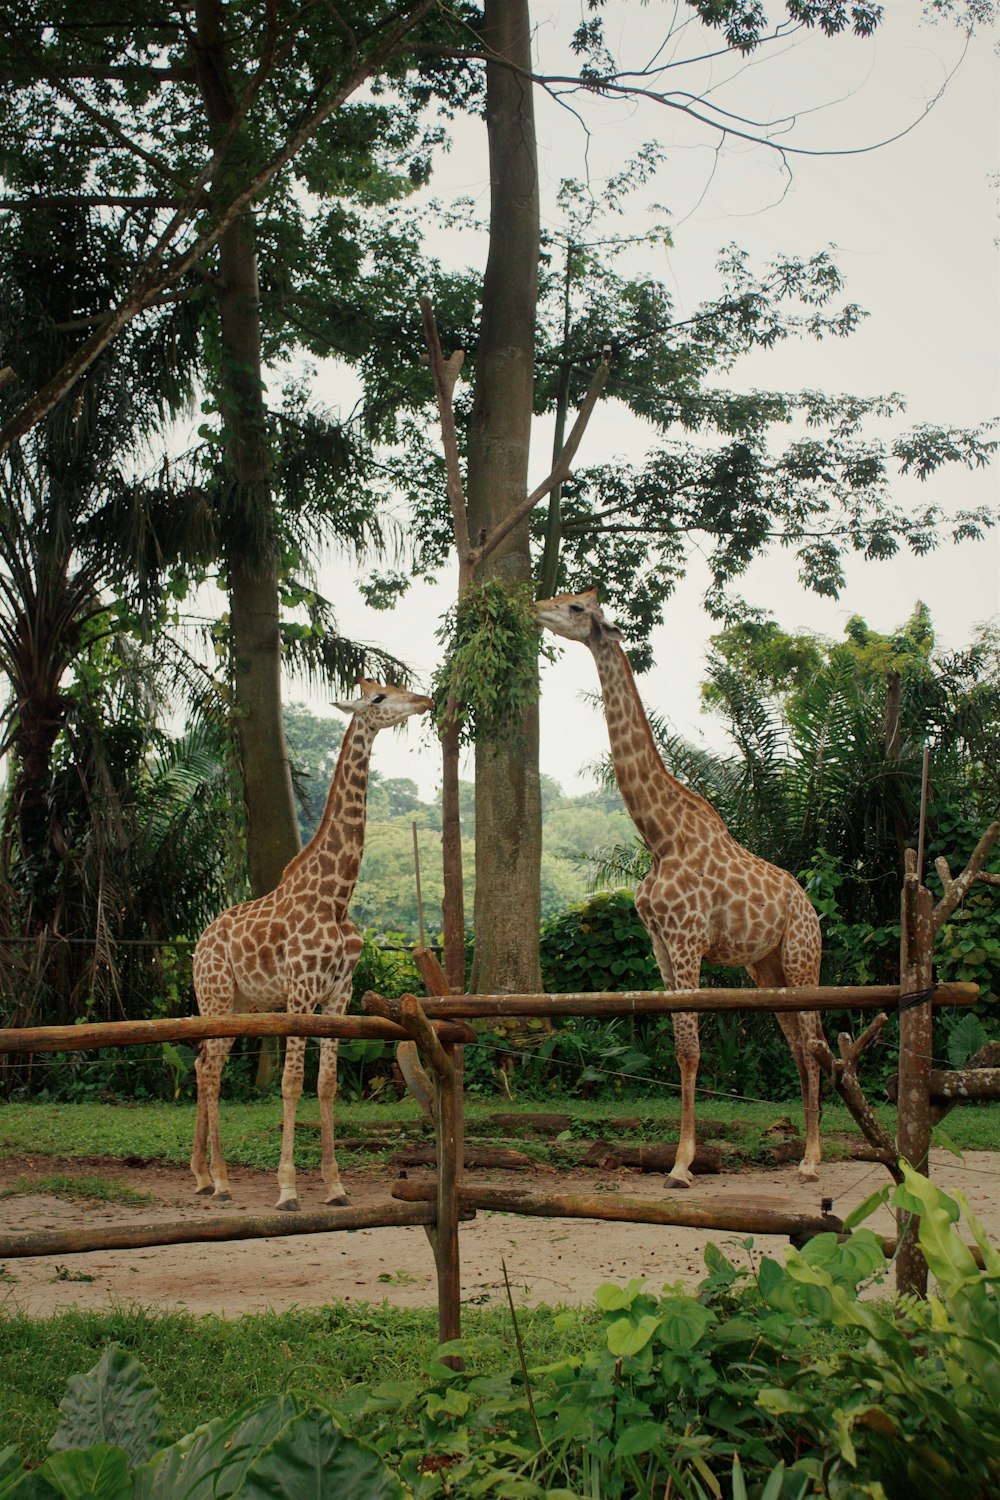 two giraffes grazing on tree leaves